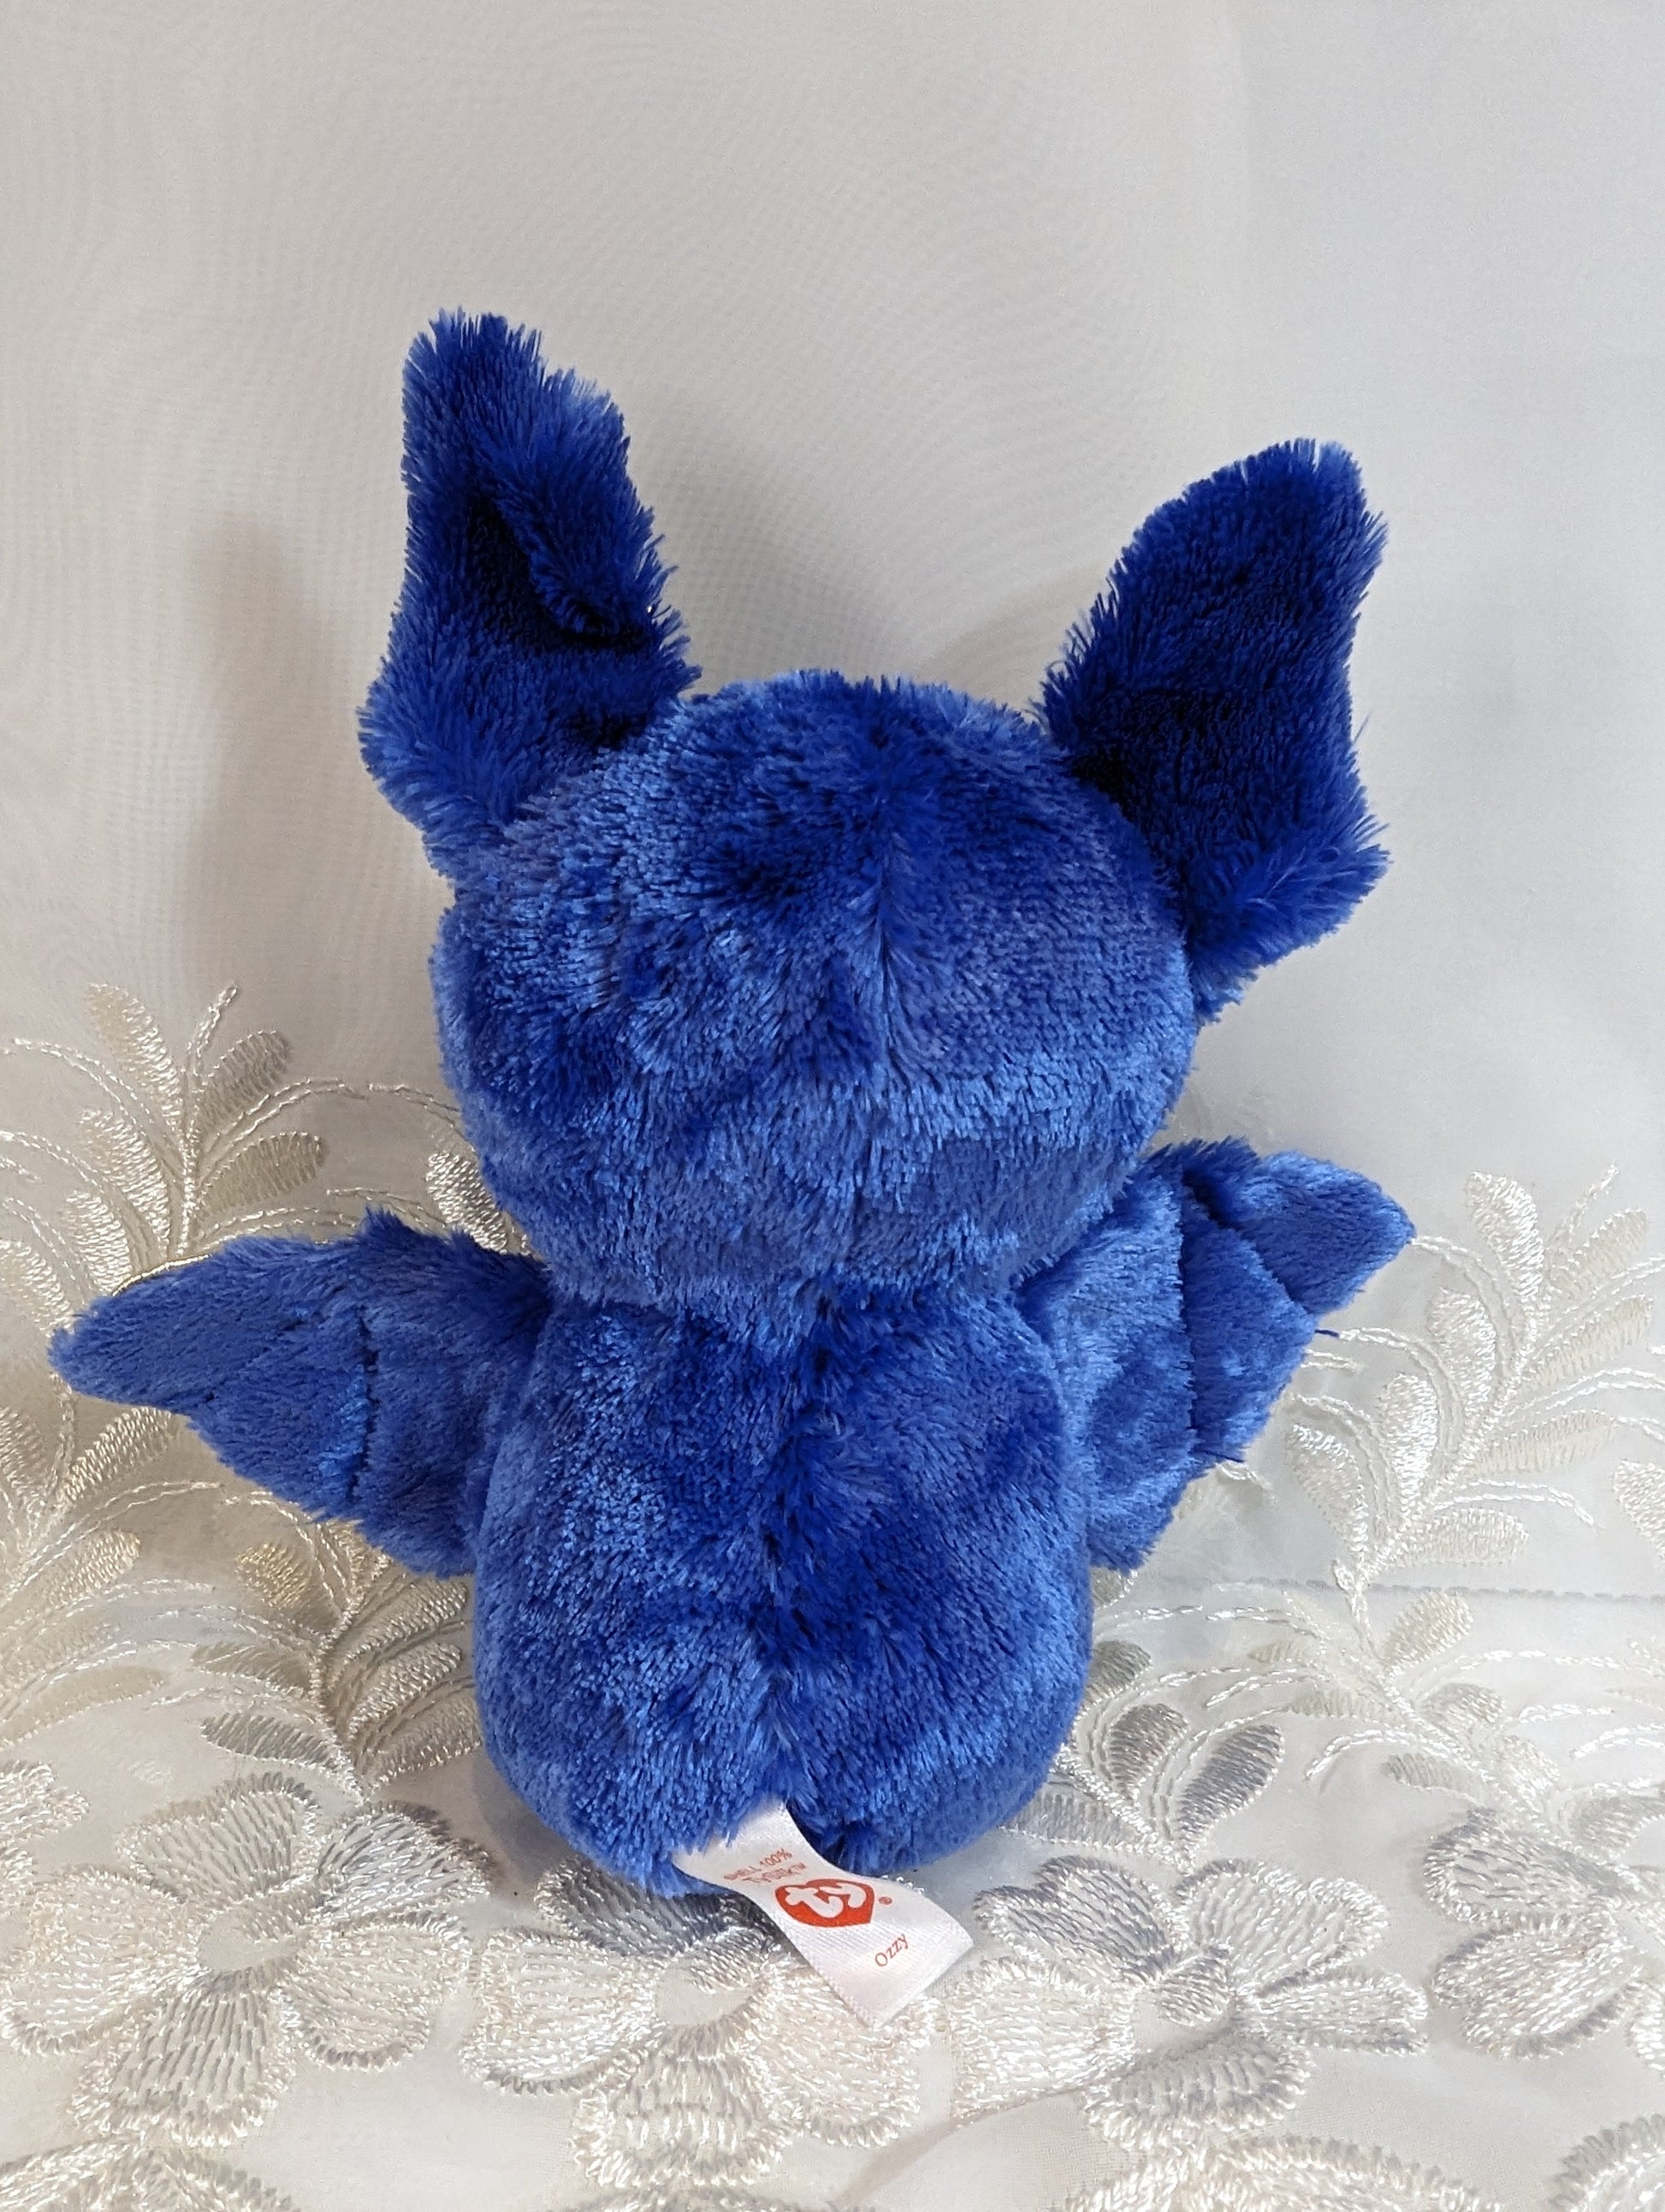 Ty Beanie Boo - Ozzy The Blue Bat (6 in) No Tag Scuffed Eye - Vintage Beanies Canada